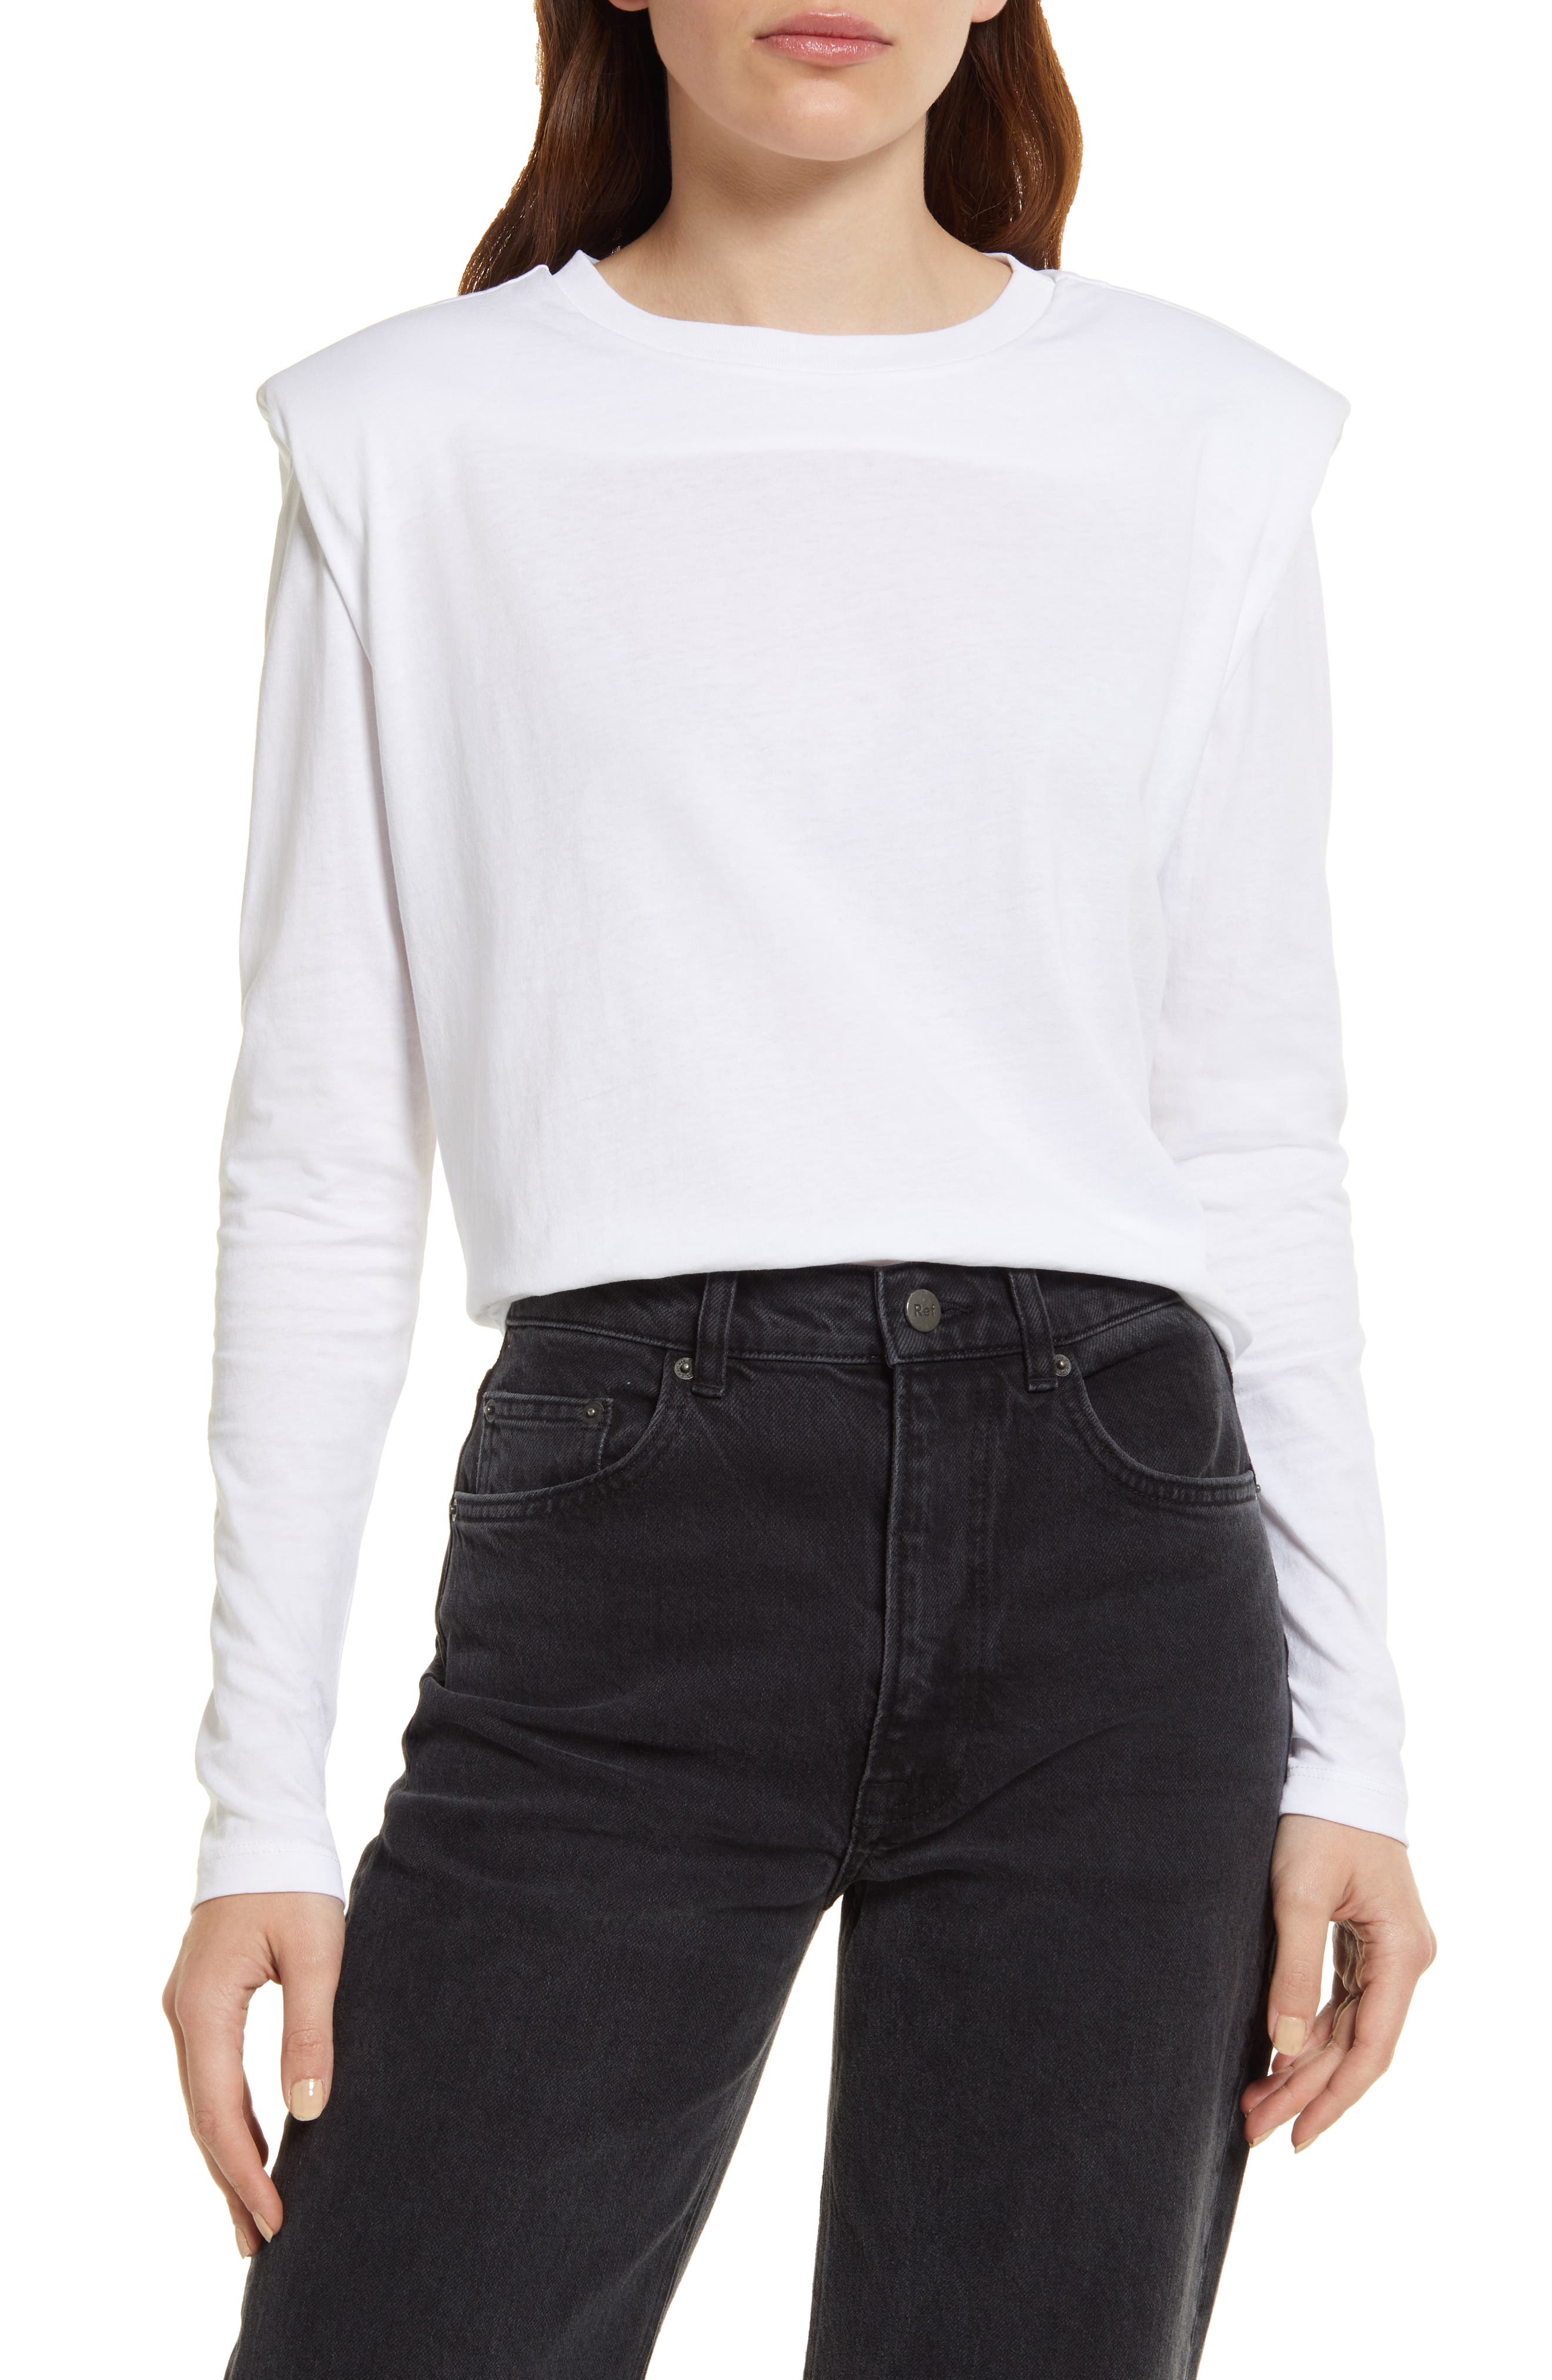 Lisa Hansen Web Design Womens Short Sleeve T Shirt Color Gray Size 30